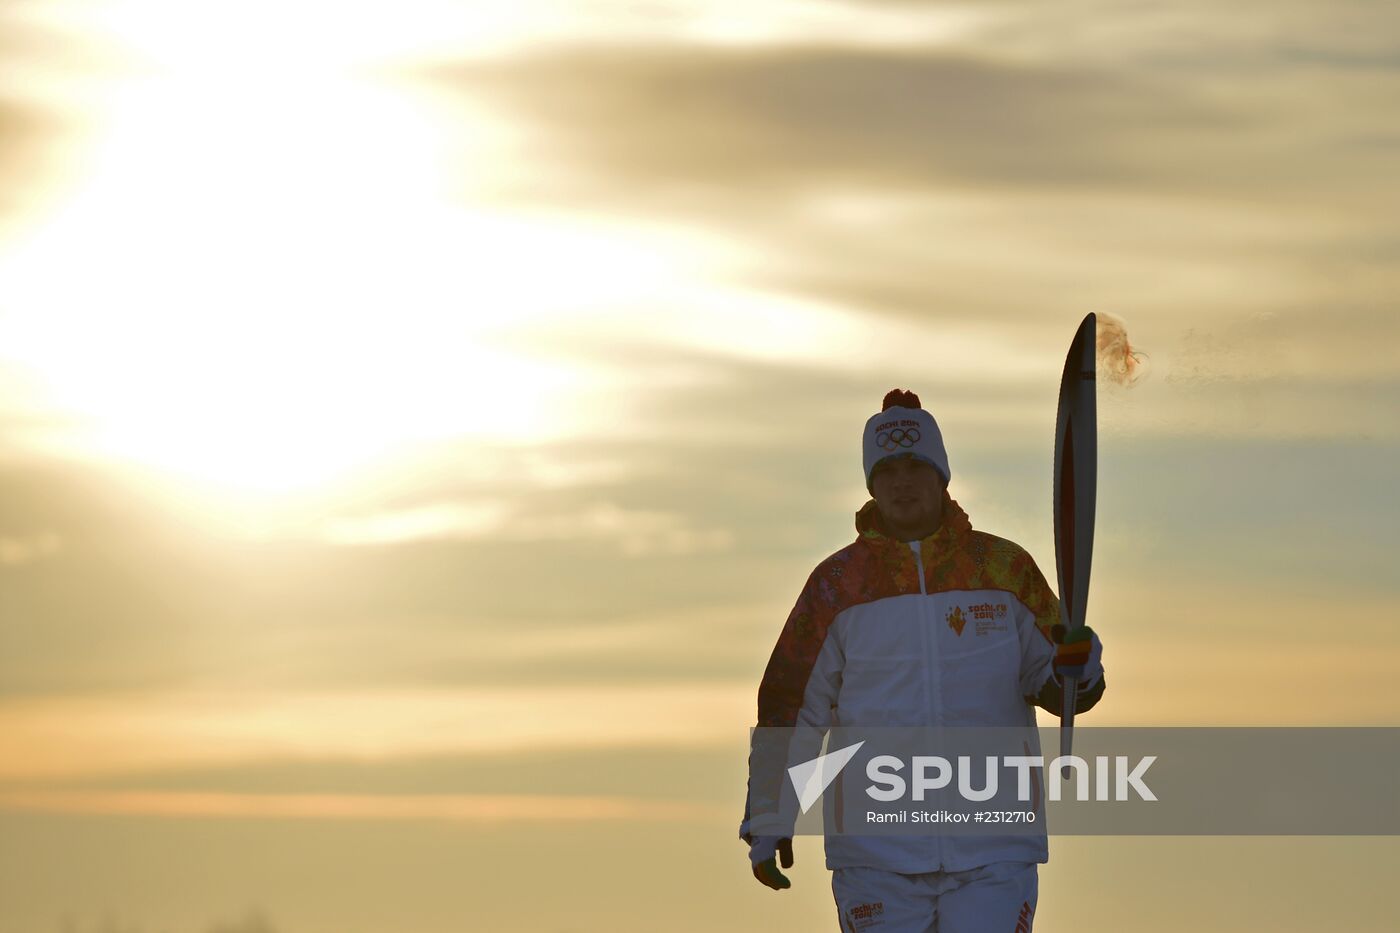 Sochi 2014 Olympic torch relay. Naryan-Mar